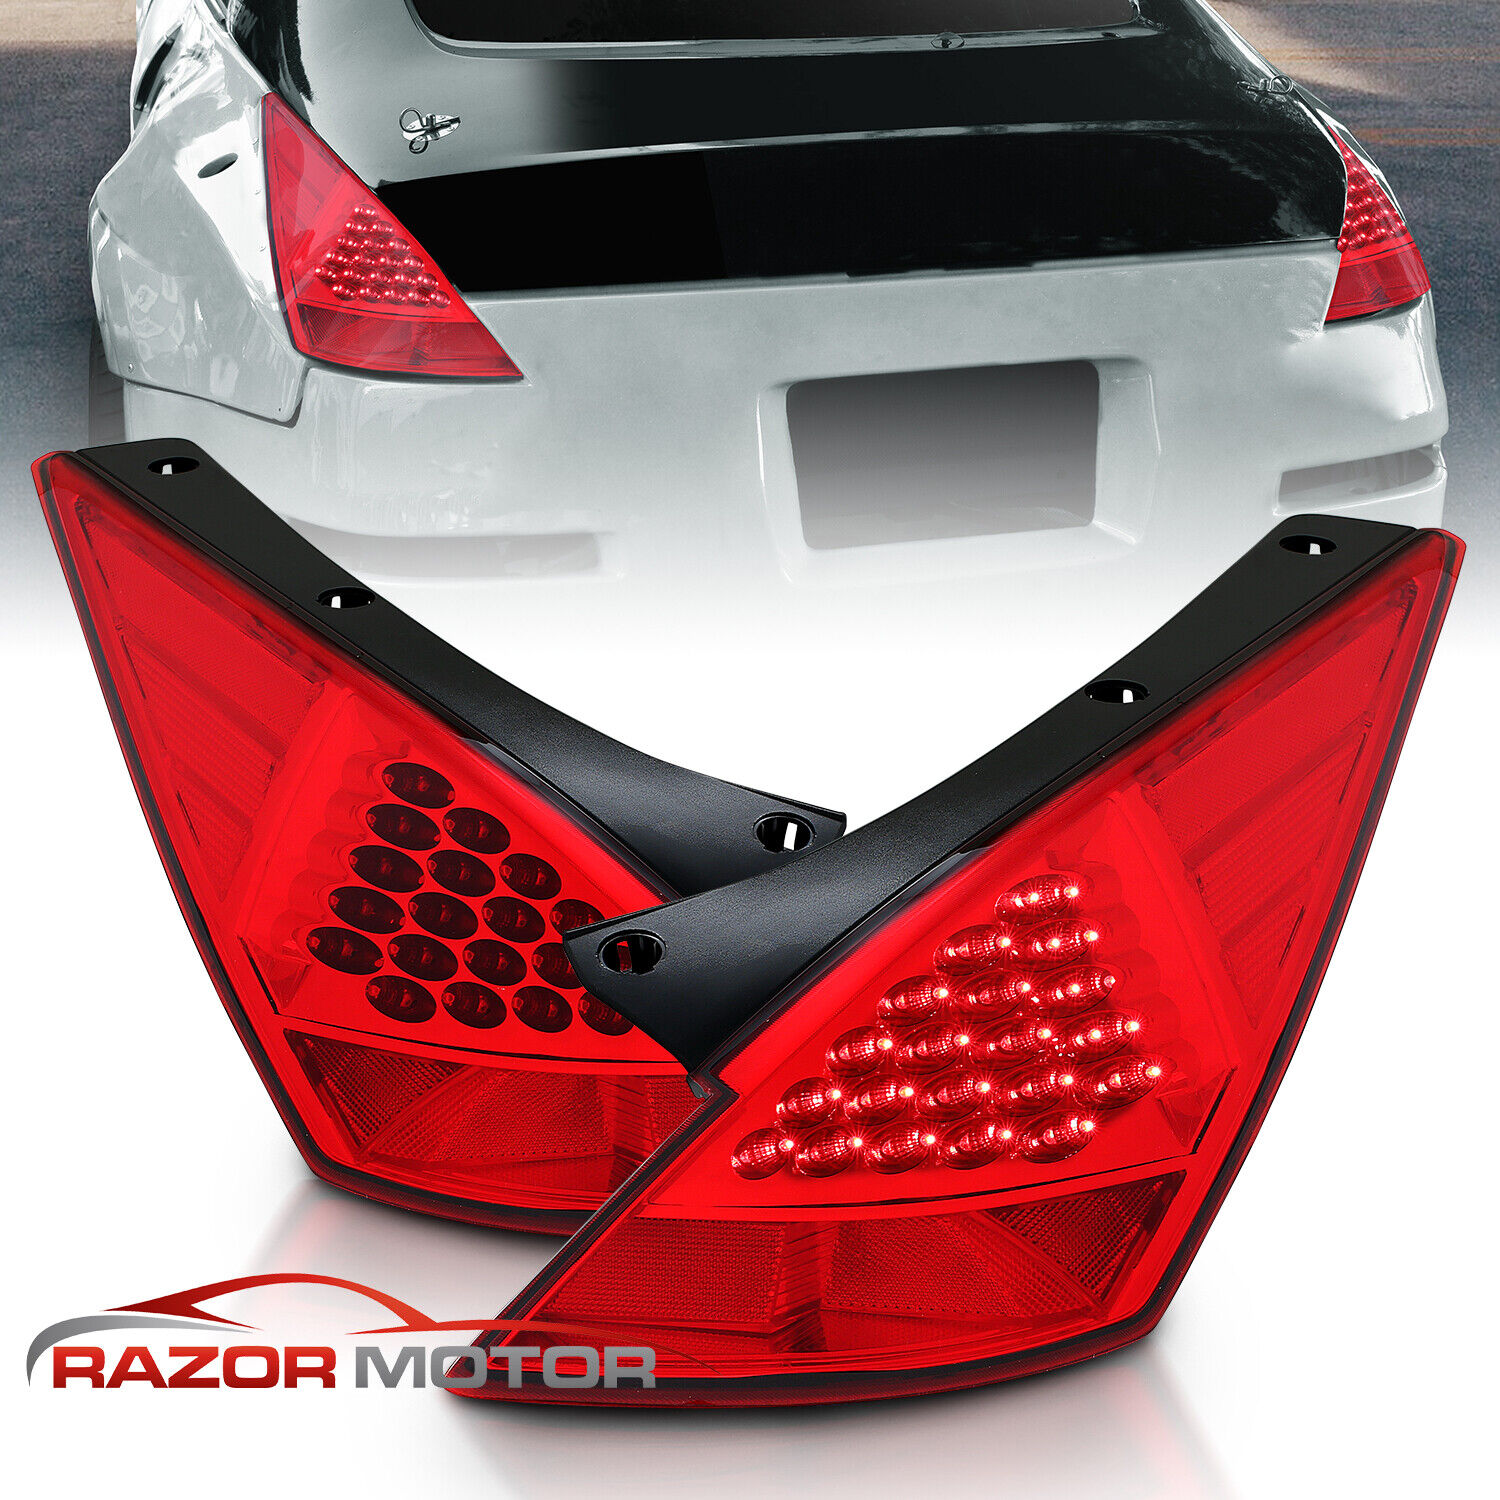 [LED Style] 2003 - 2007 For 350Z Red Rear LED Brake Tail Lights Pair